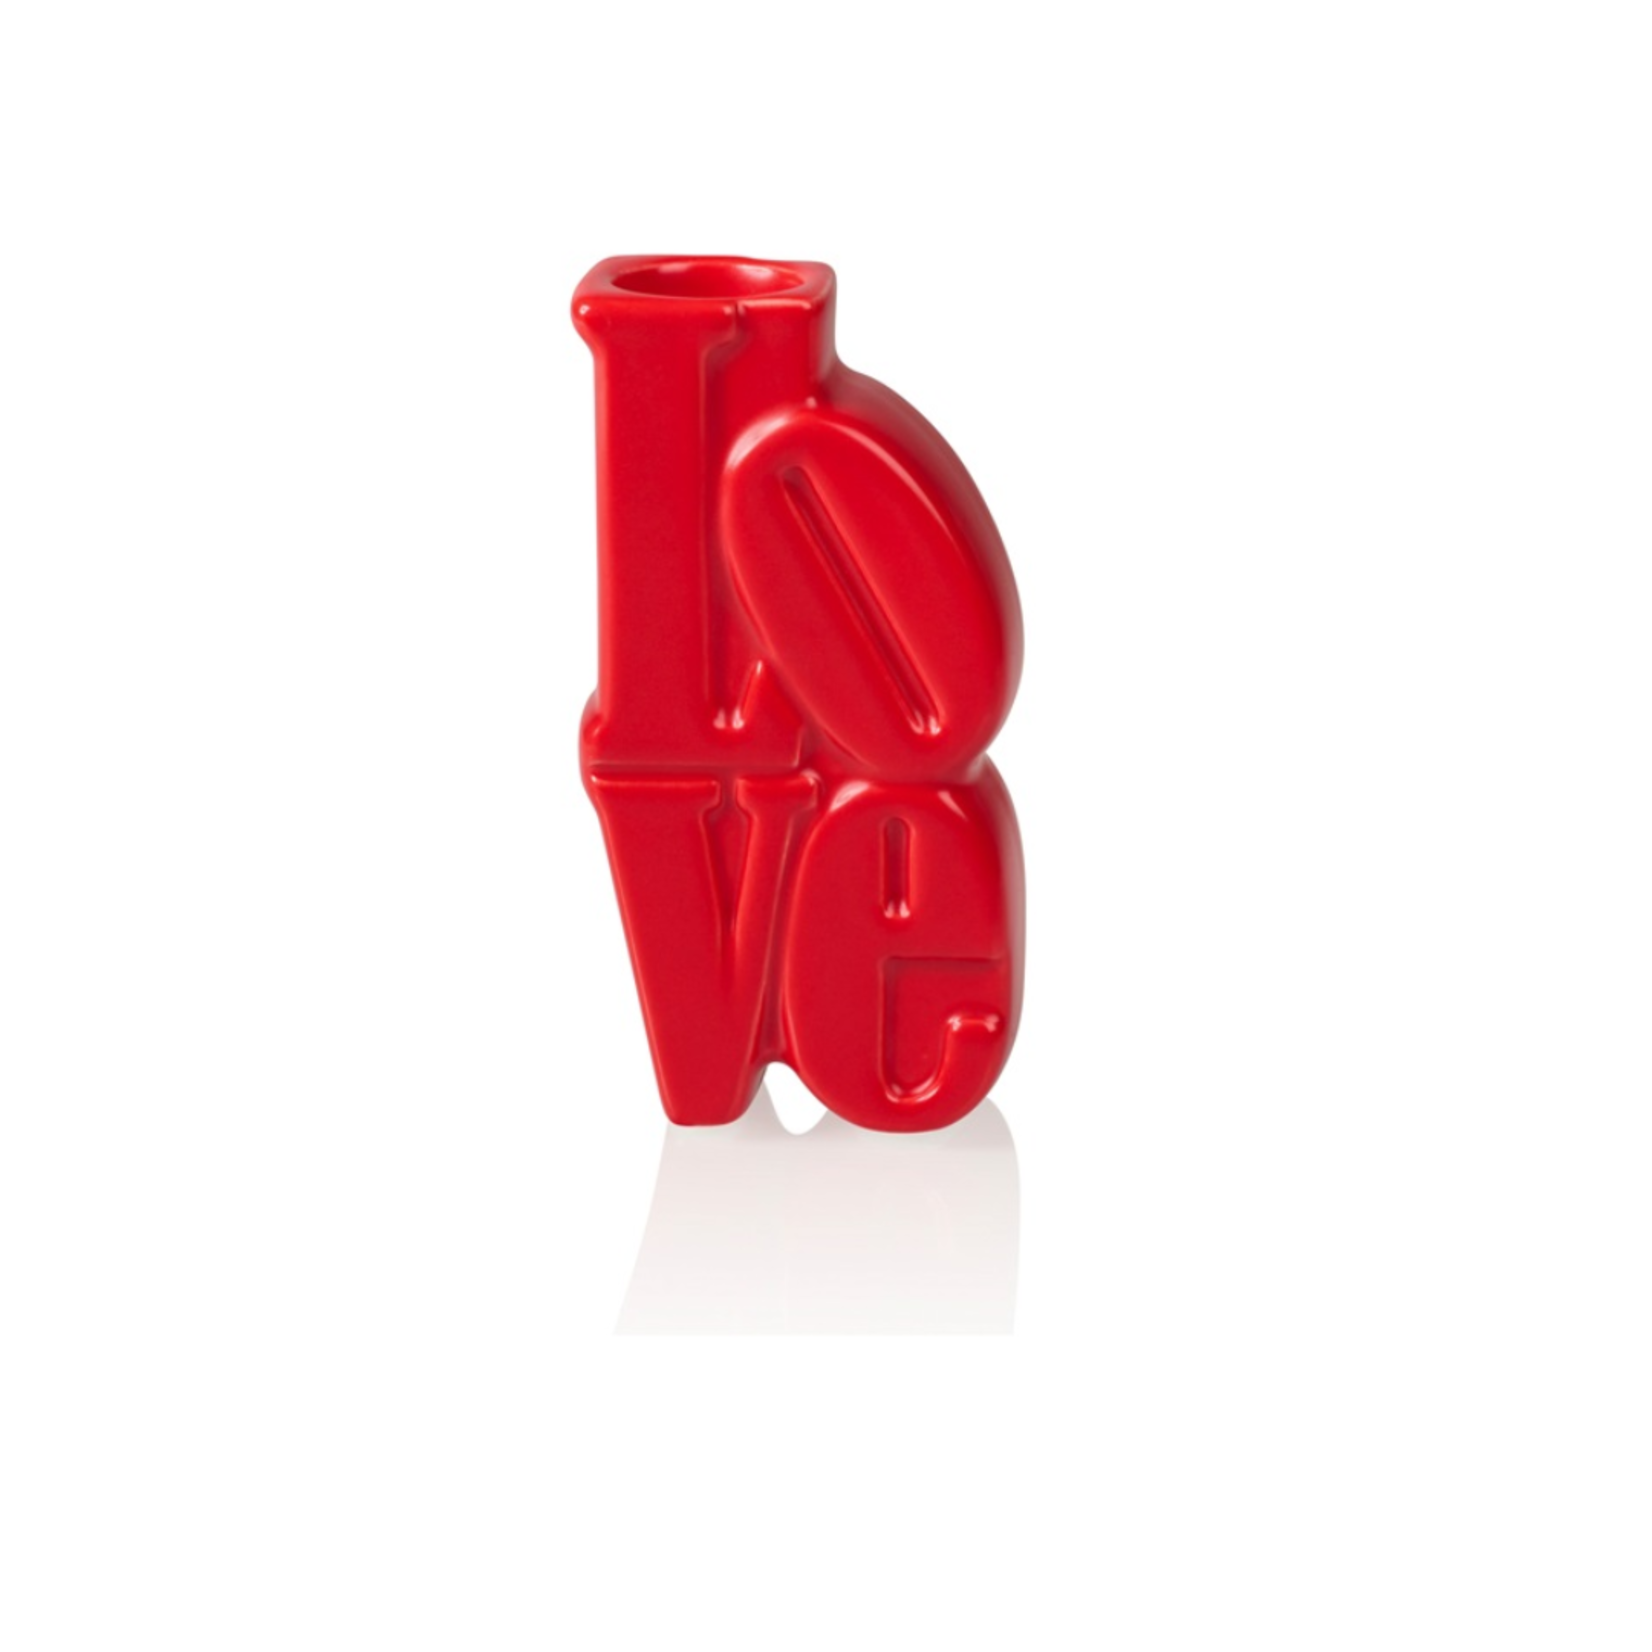 Bitten-Design Love Candle Holder Red